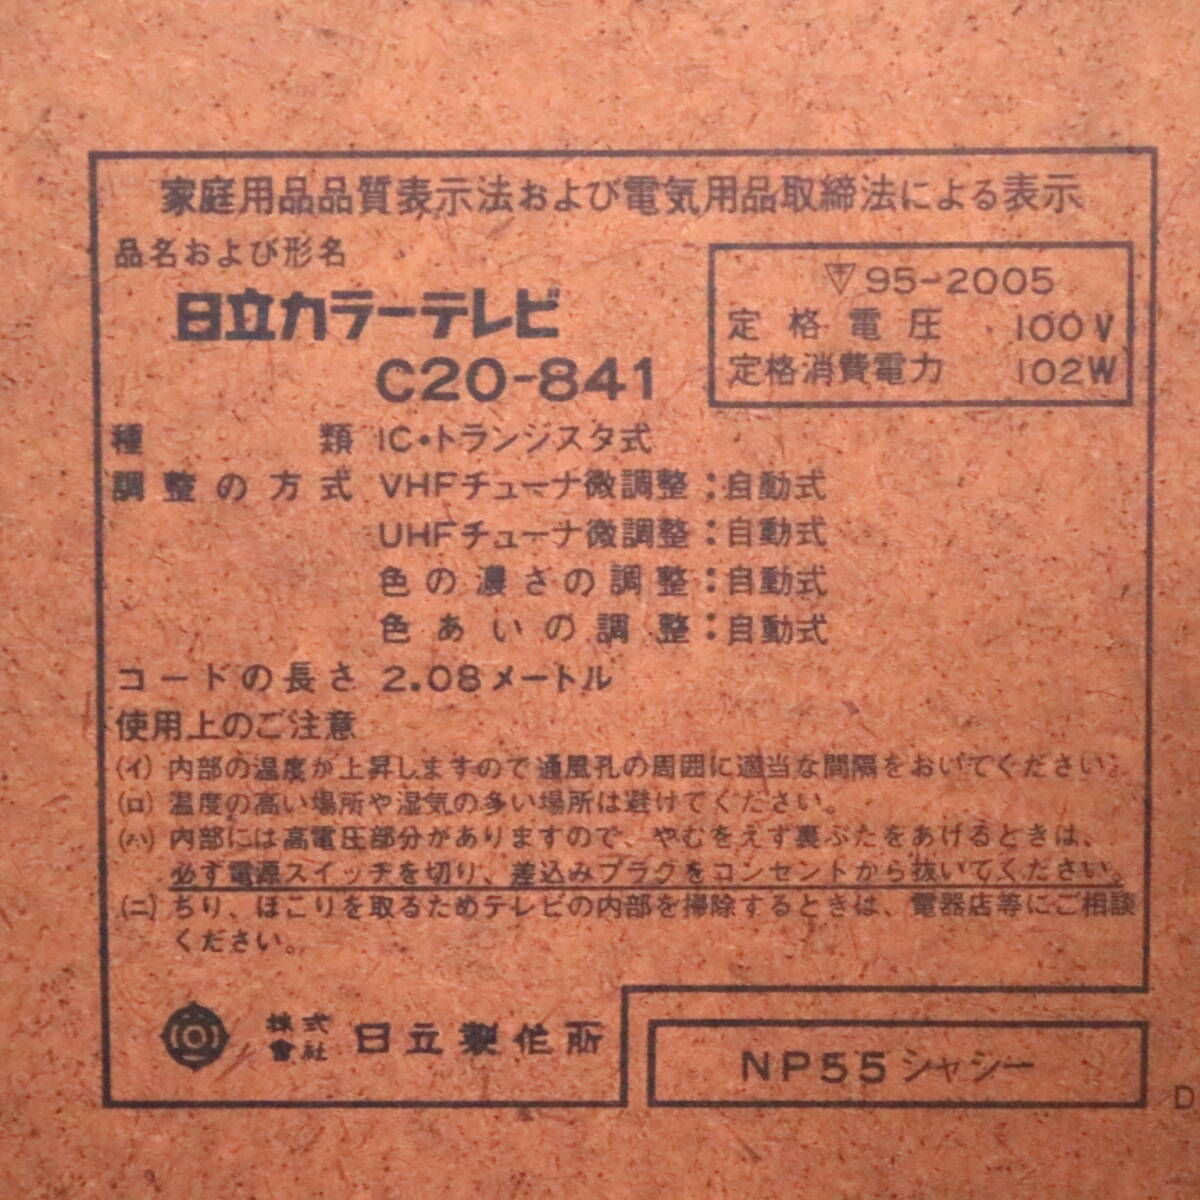 a//A6921 [ Showa Retro ] Hitachi цвет телевизор C20-841 электронно-лучевая трубка телевизор 20 форма Hitachi Kido цвет 